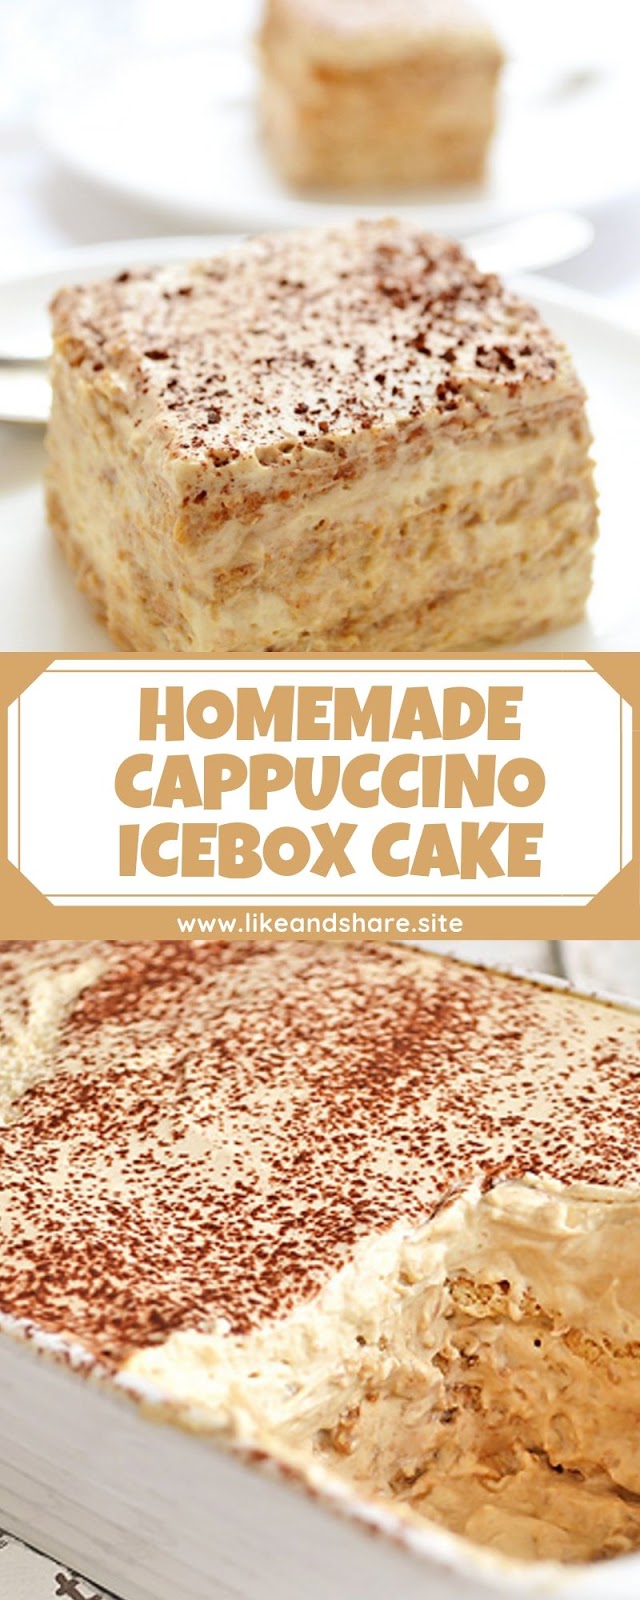 HOMEMADE CAPPUCCINO ICEBOX CAKE